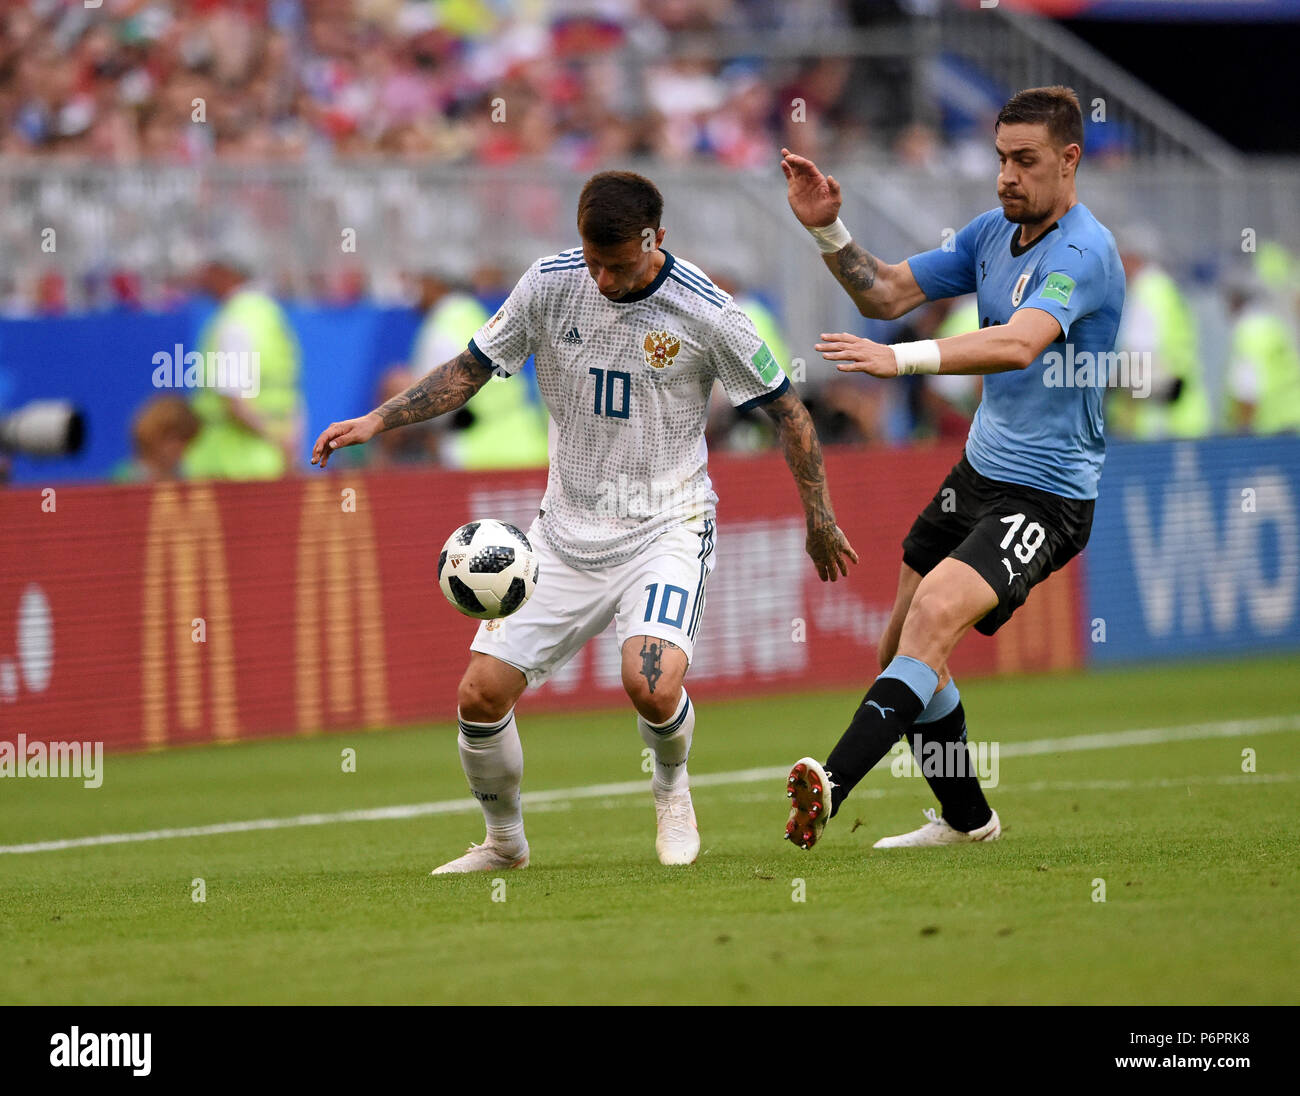 Samara, Russia - June 25, 2018. Uruguayan defender Sebastian Coates and Russian striker Fedor Smolov during FIFA World Cup 2018 match Uruguay vs Russi Stock Photo